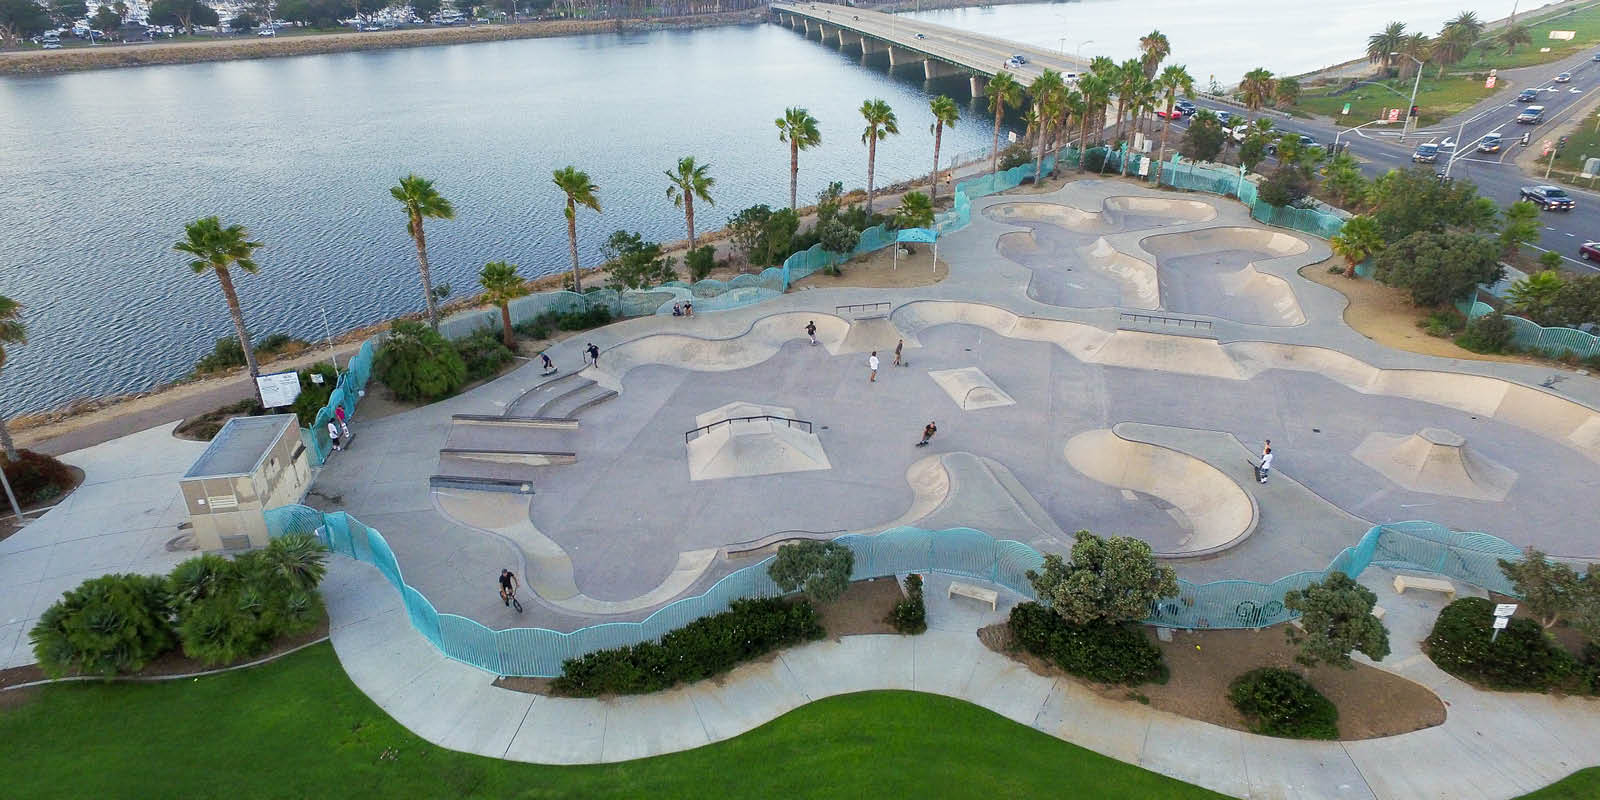 Robb Field Skate Park an Olympic sized Skate Experience in San Diego